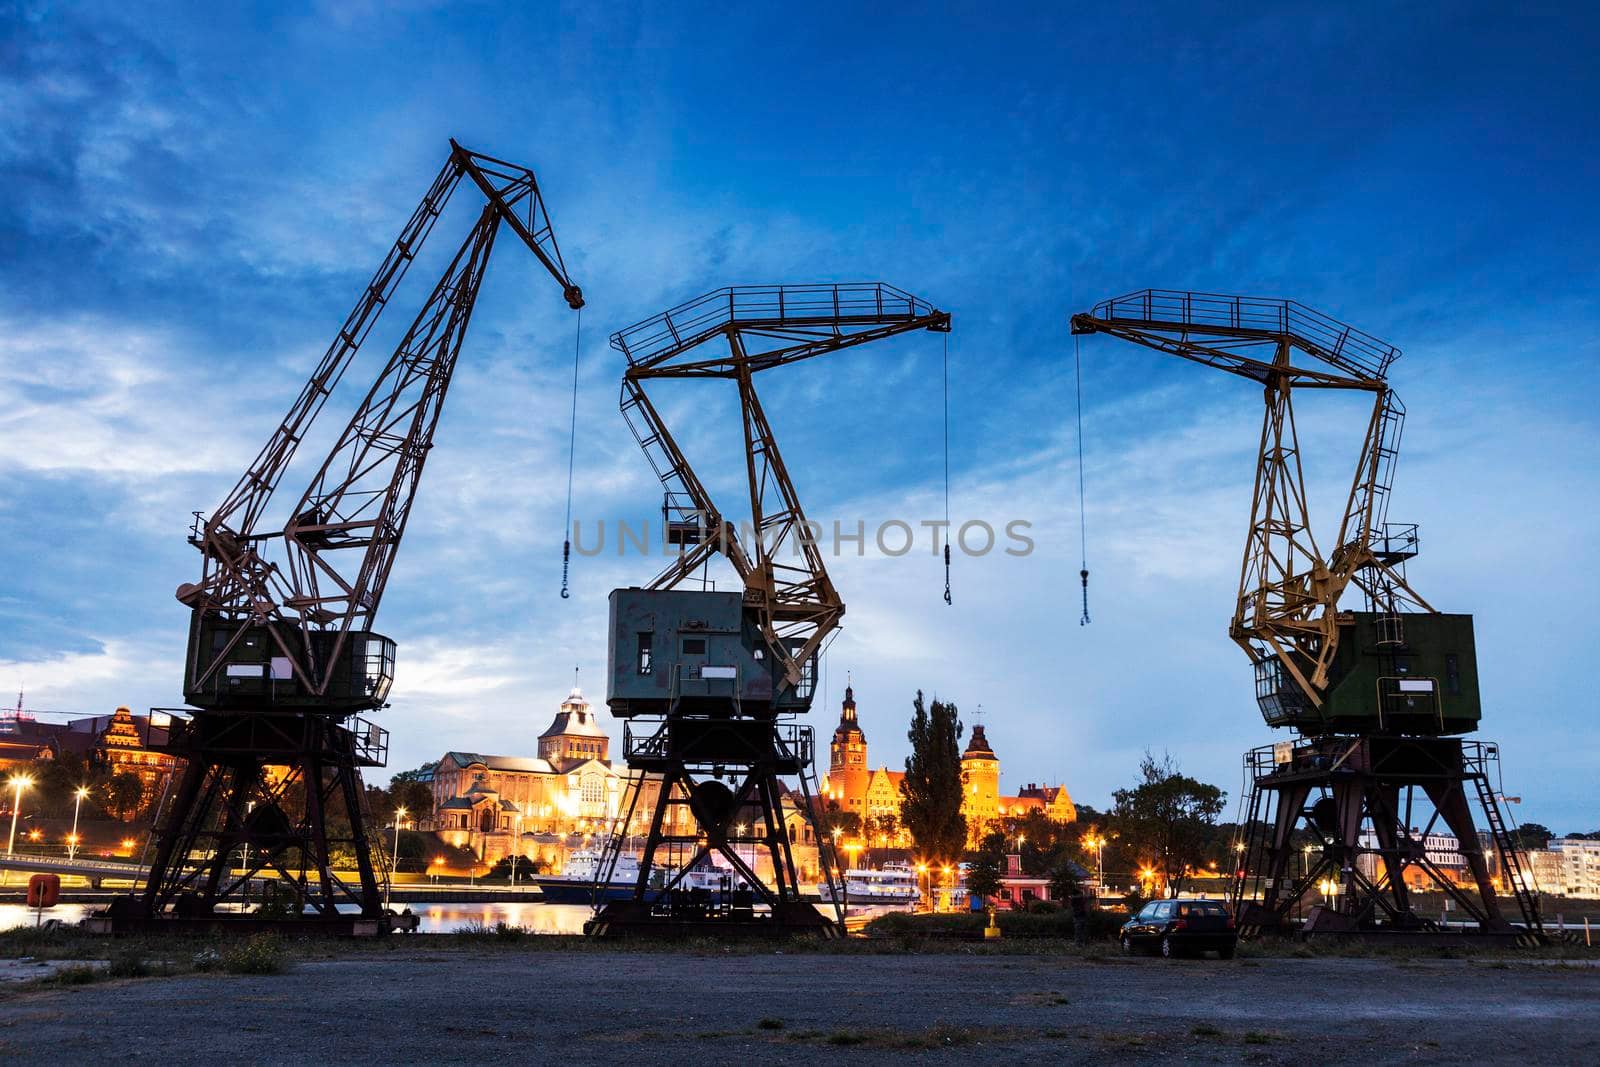 Old cranes in Szczecin by benkrut